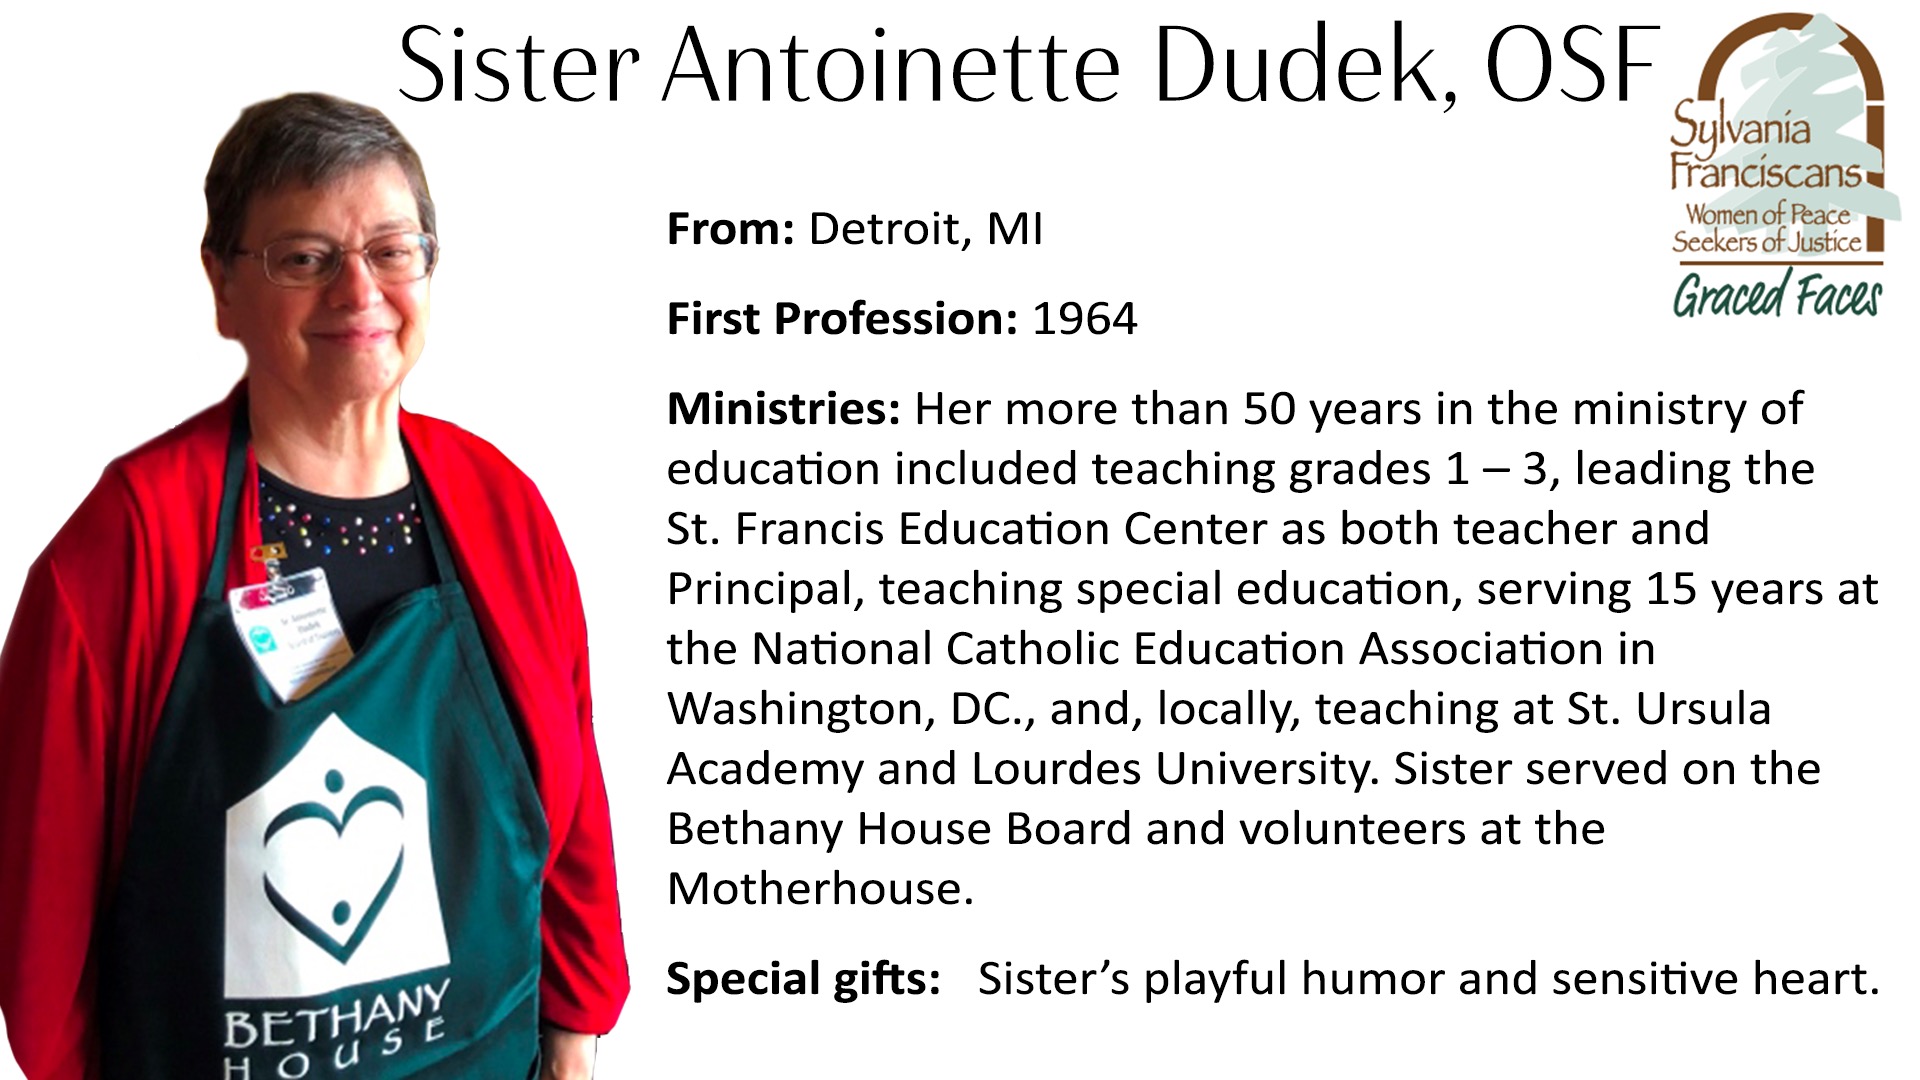 Sister Antoinette Dudek, OSF